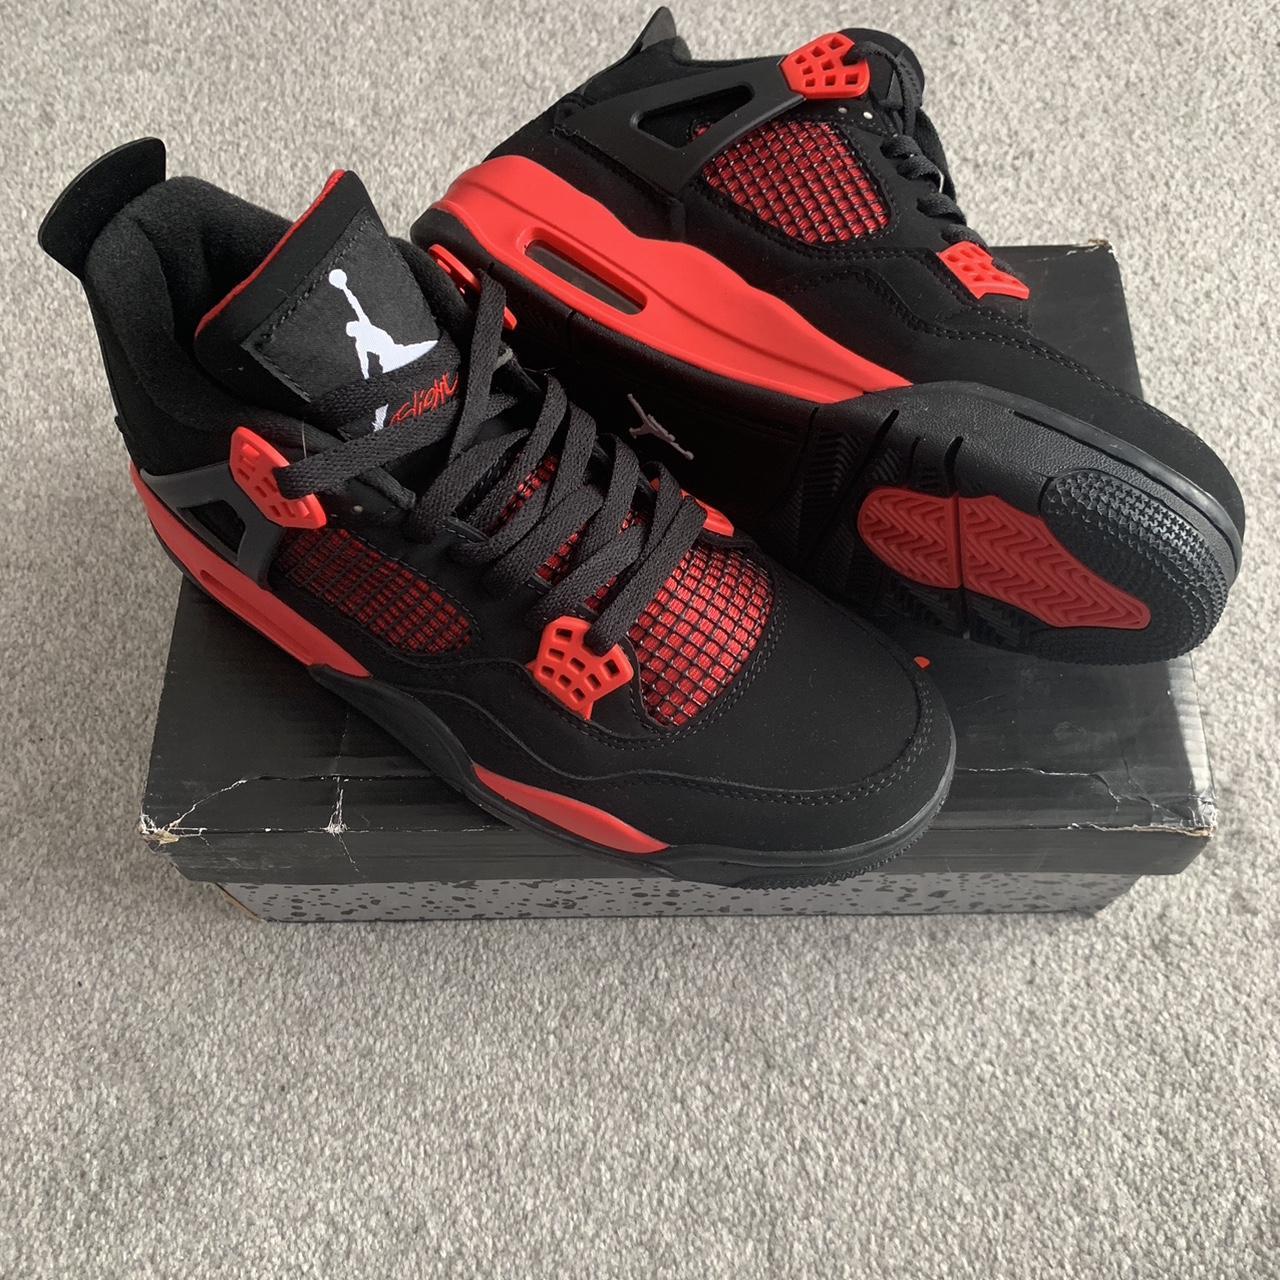 Jordan 4 Red Thunders Size 7.5 UK New, unworn and... - Depop